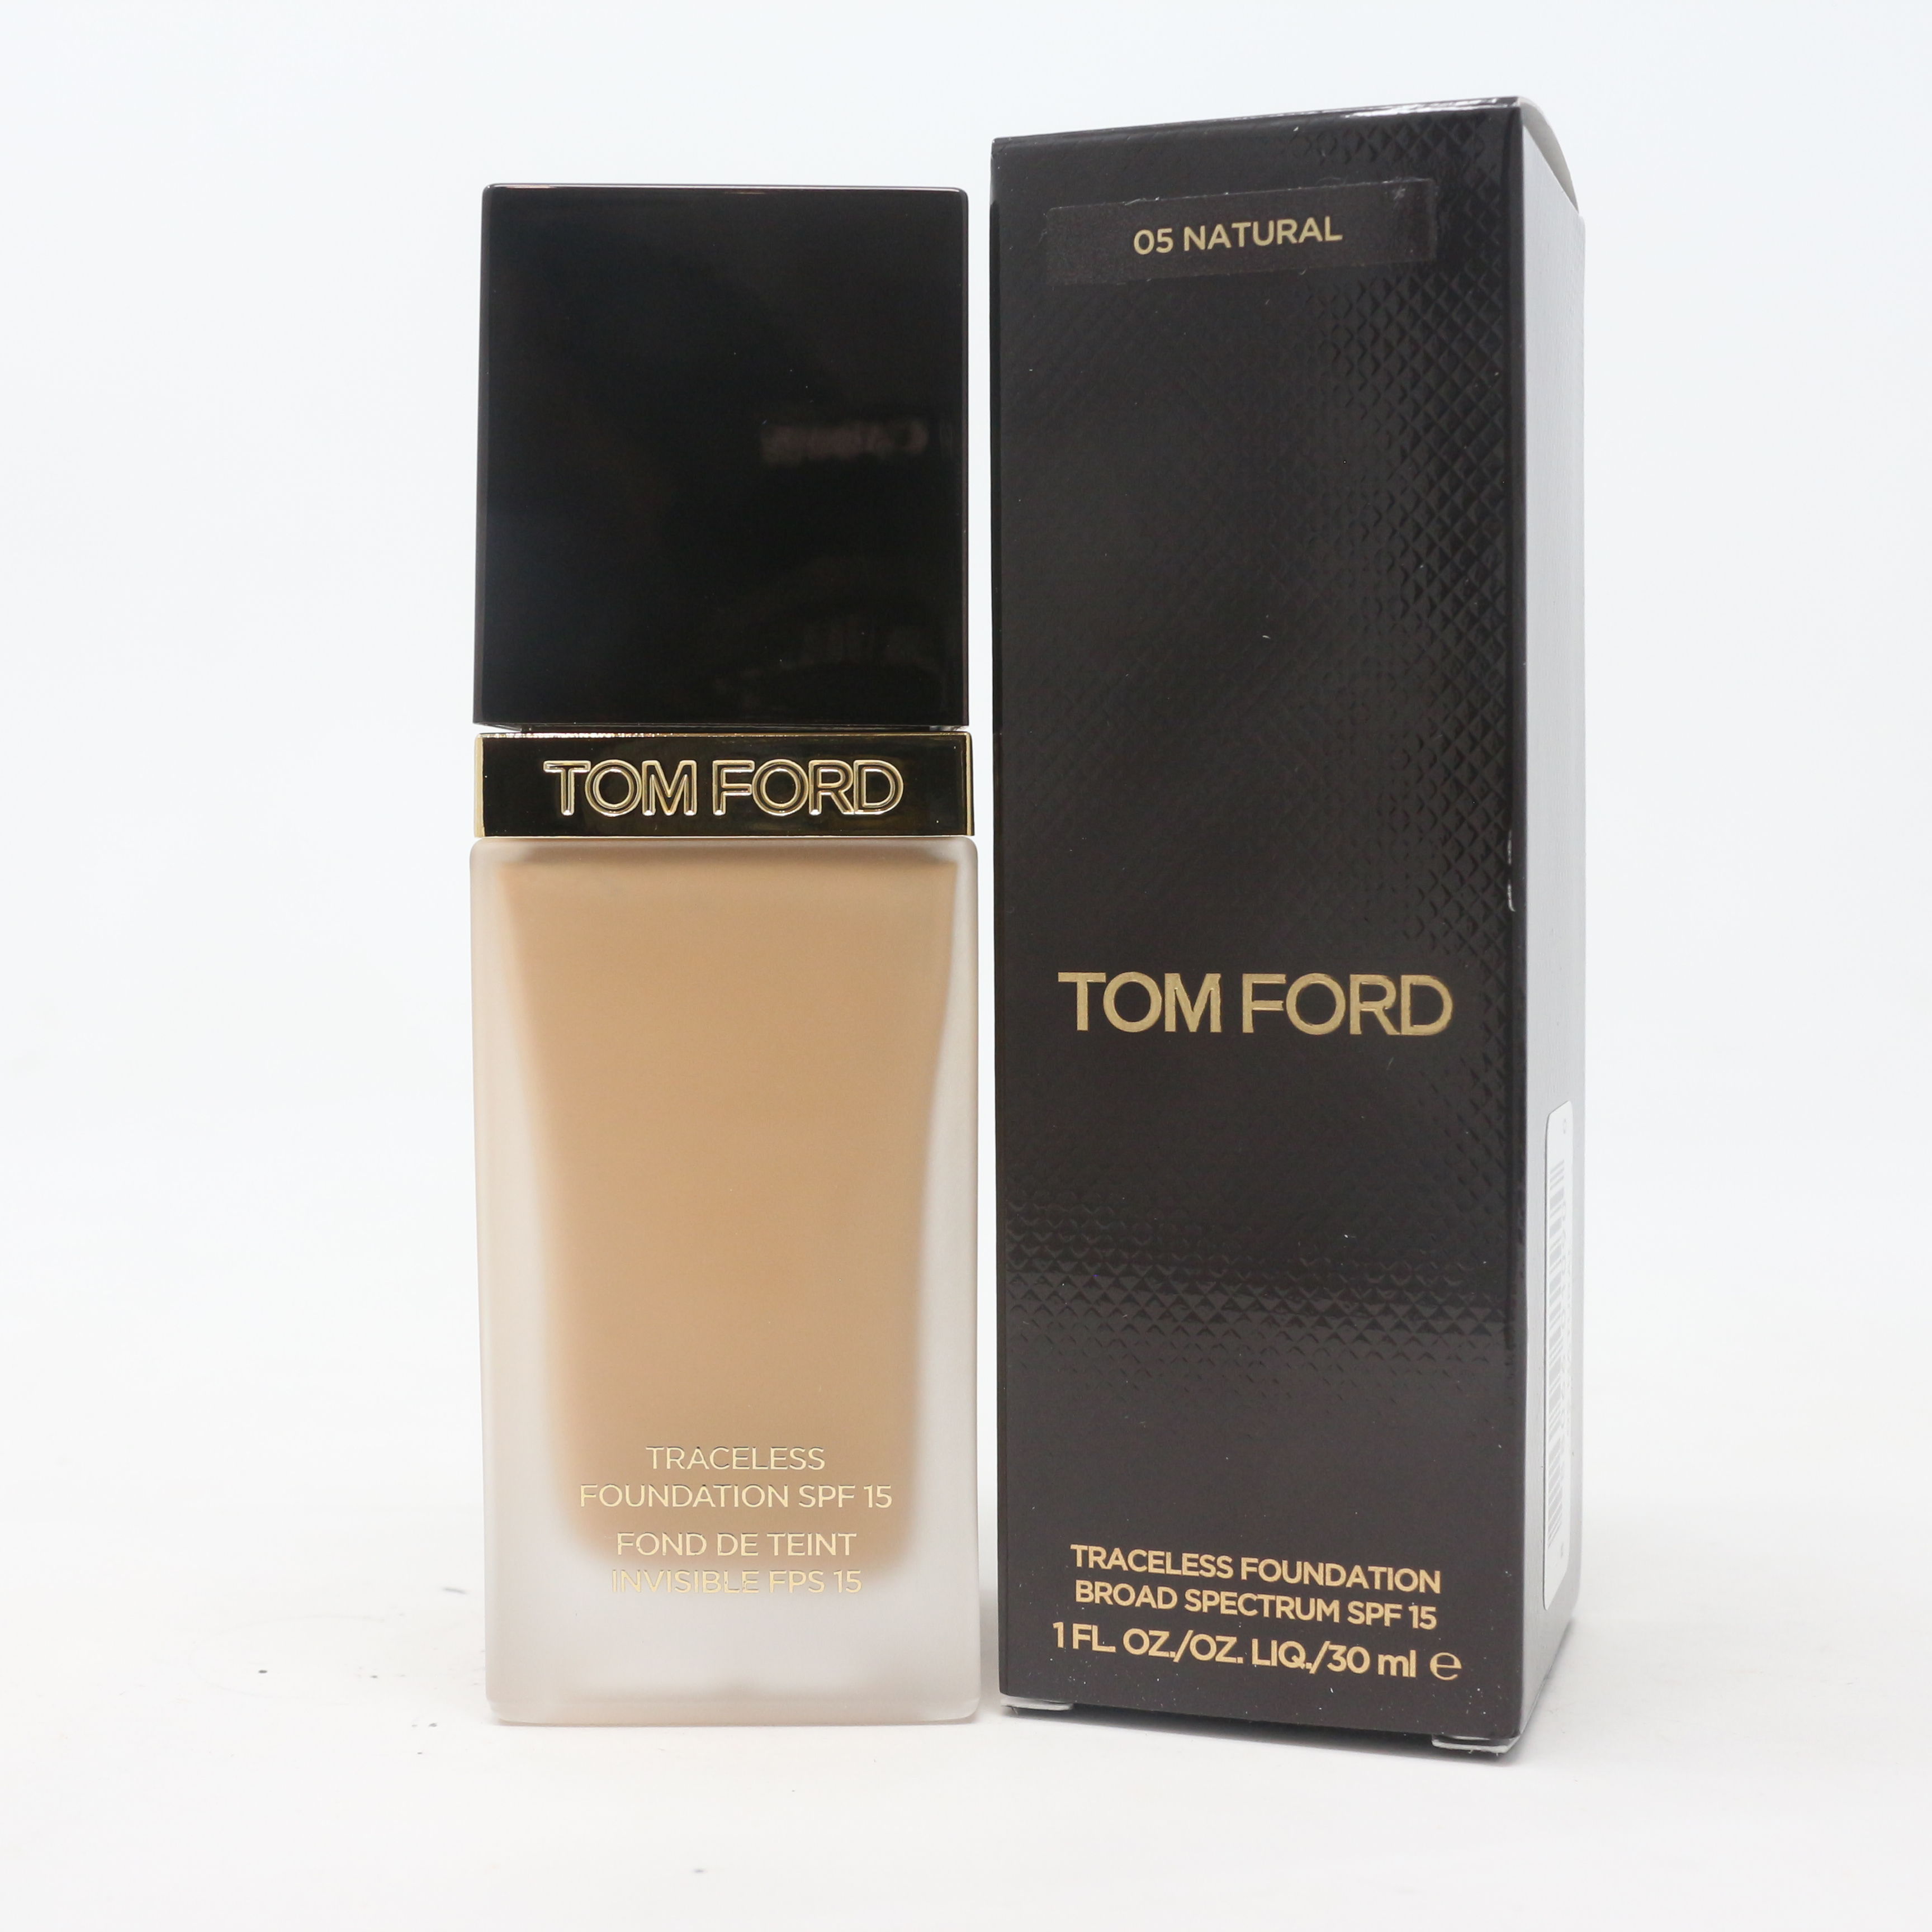 Tom Ford Traceless Foundation SPF 15 /30ml New In Box | eBay